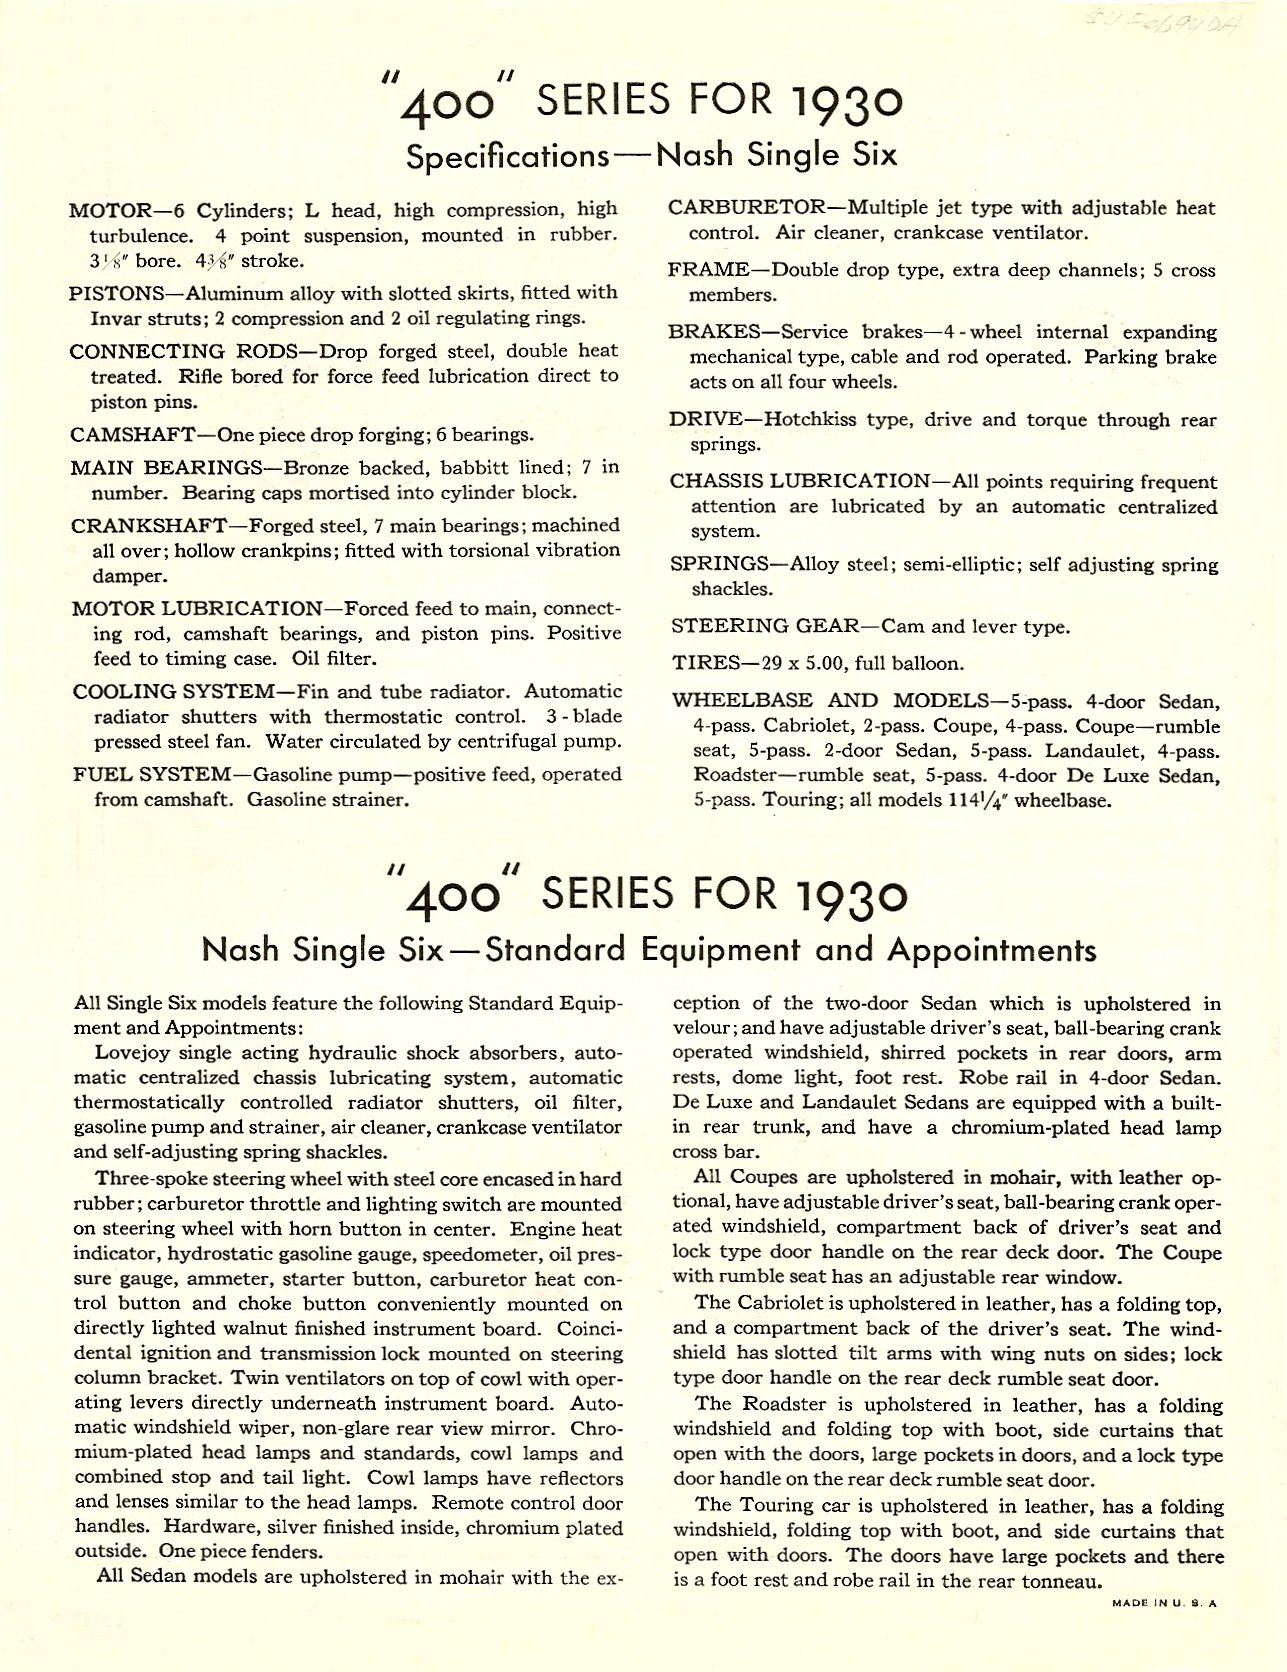 1930 Nash 400 Single Six Coupes Folder Page 3